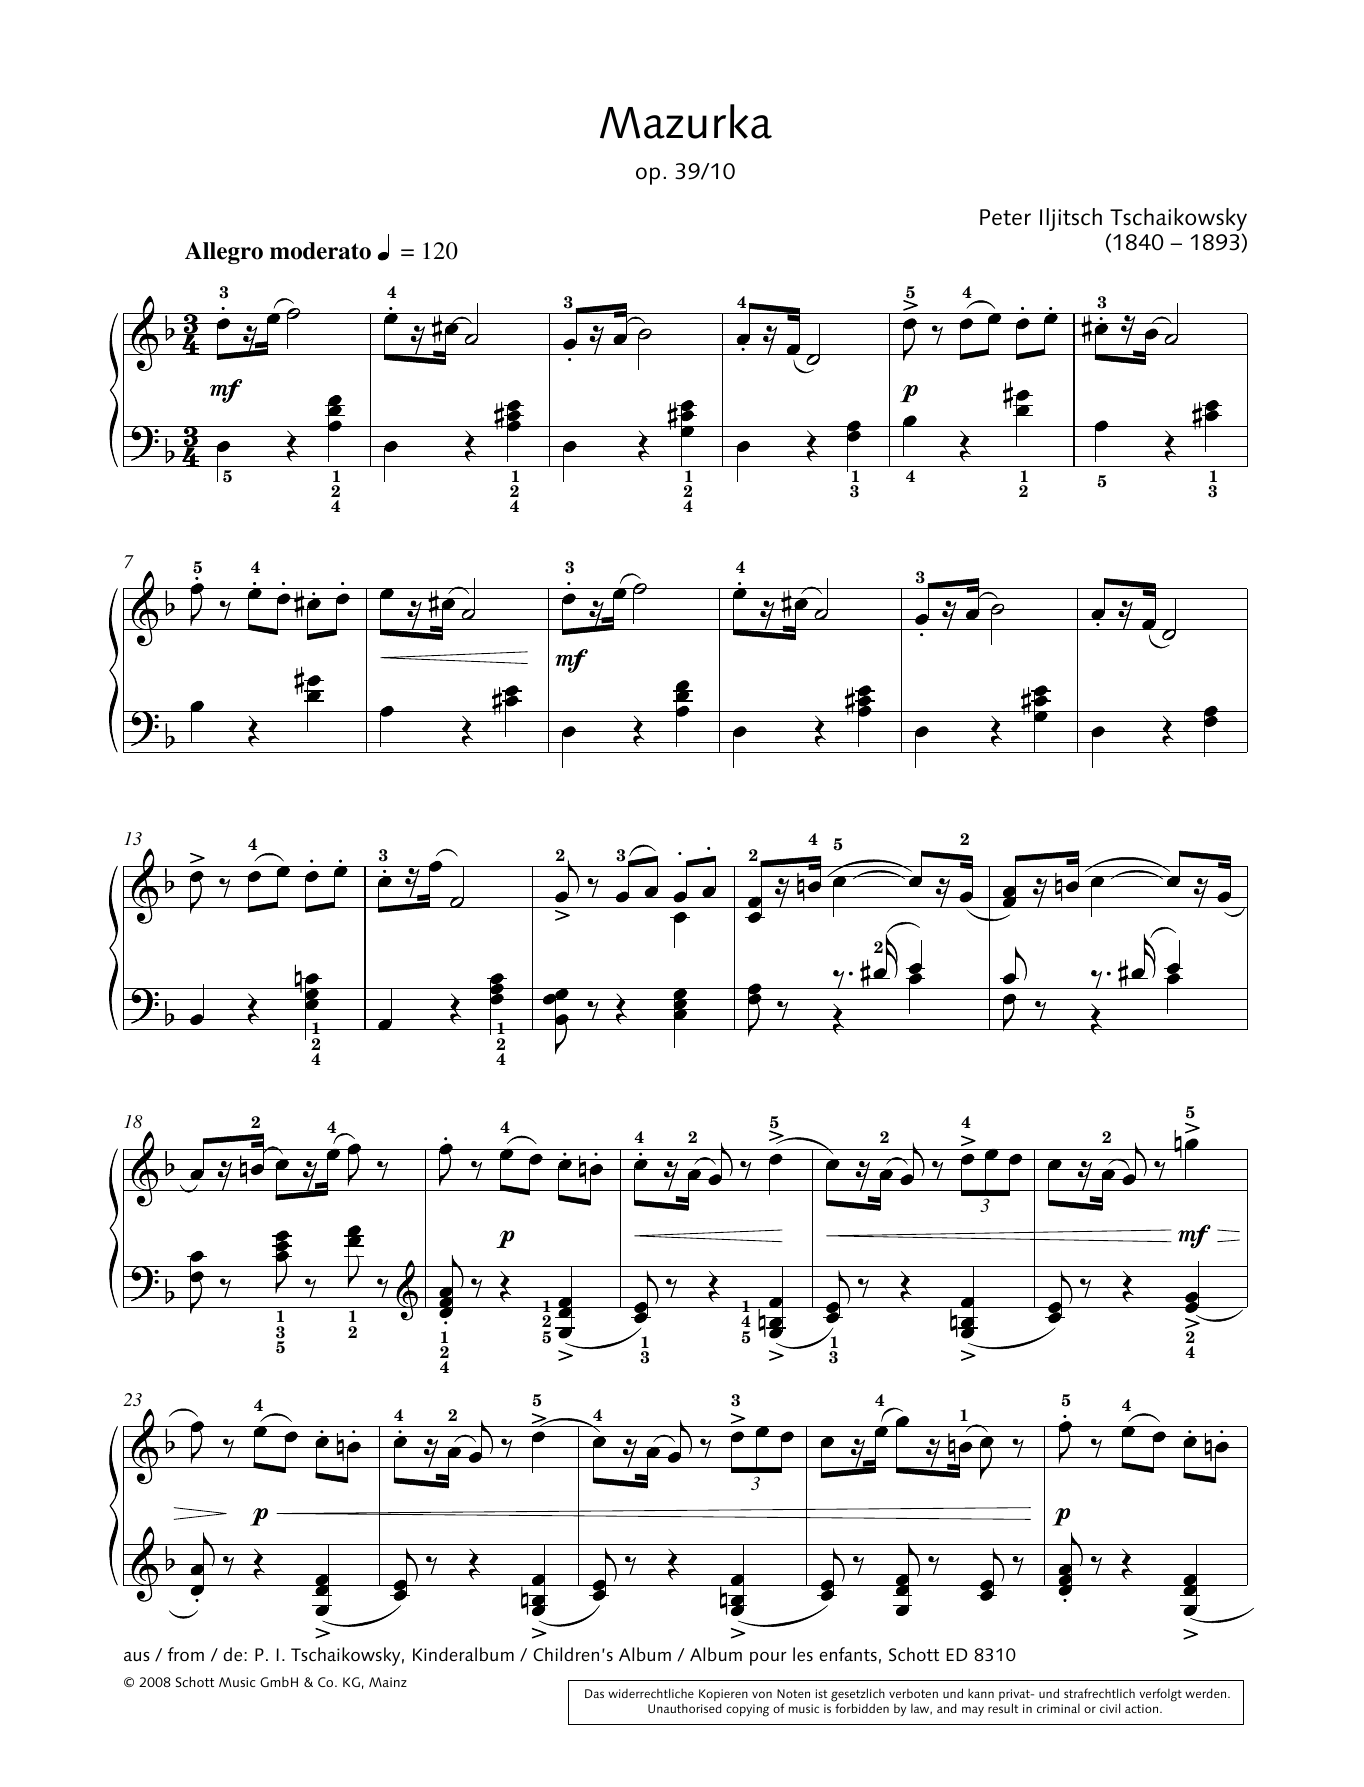 Hans-Gunter Heumann Mazurka Sheet Music Notes & Chords for Piano Solo - Download or Print PDF